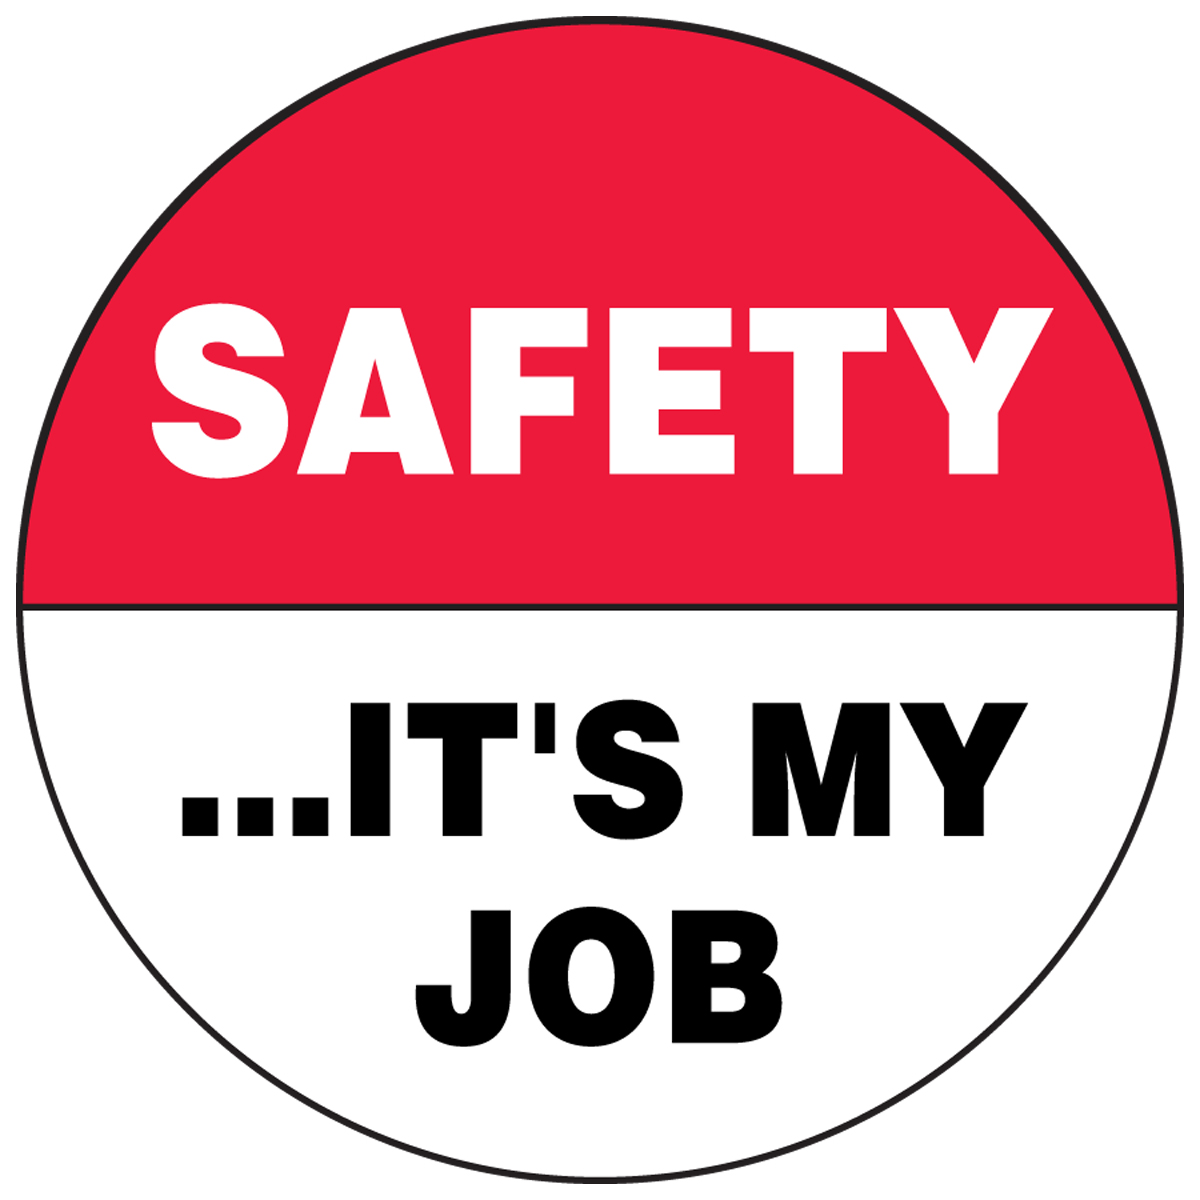 SAFETY …IT'S MY JOB